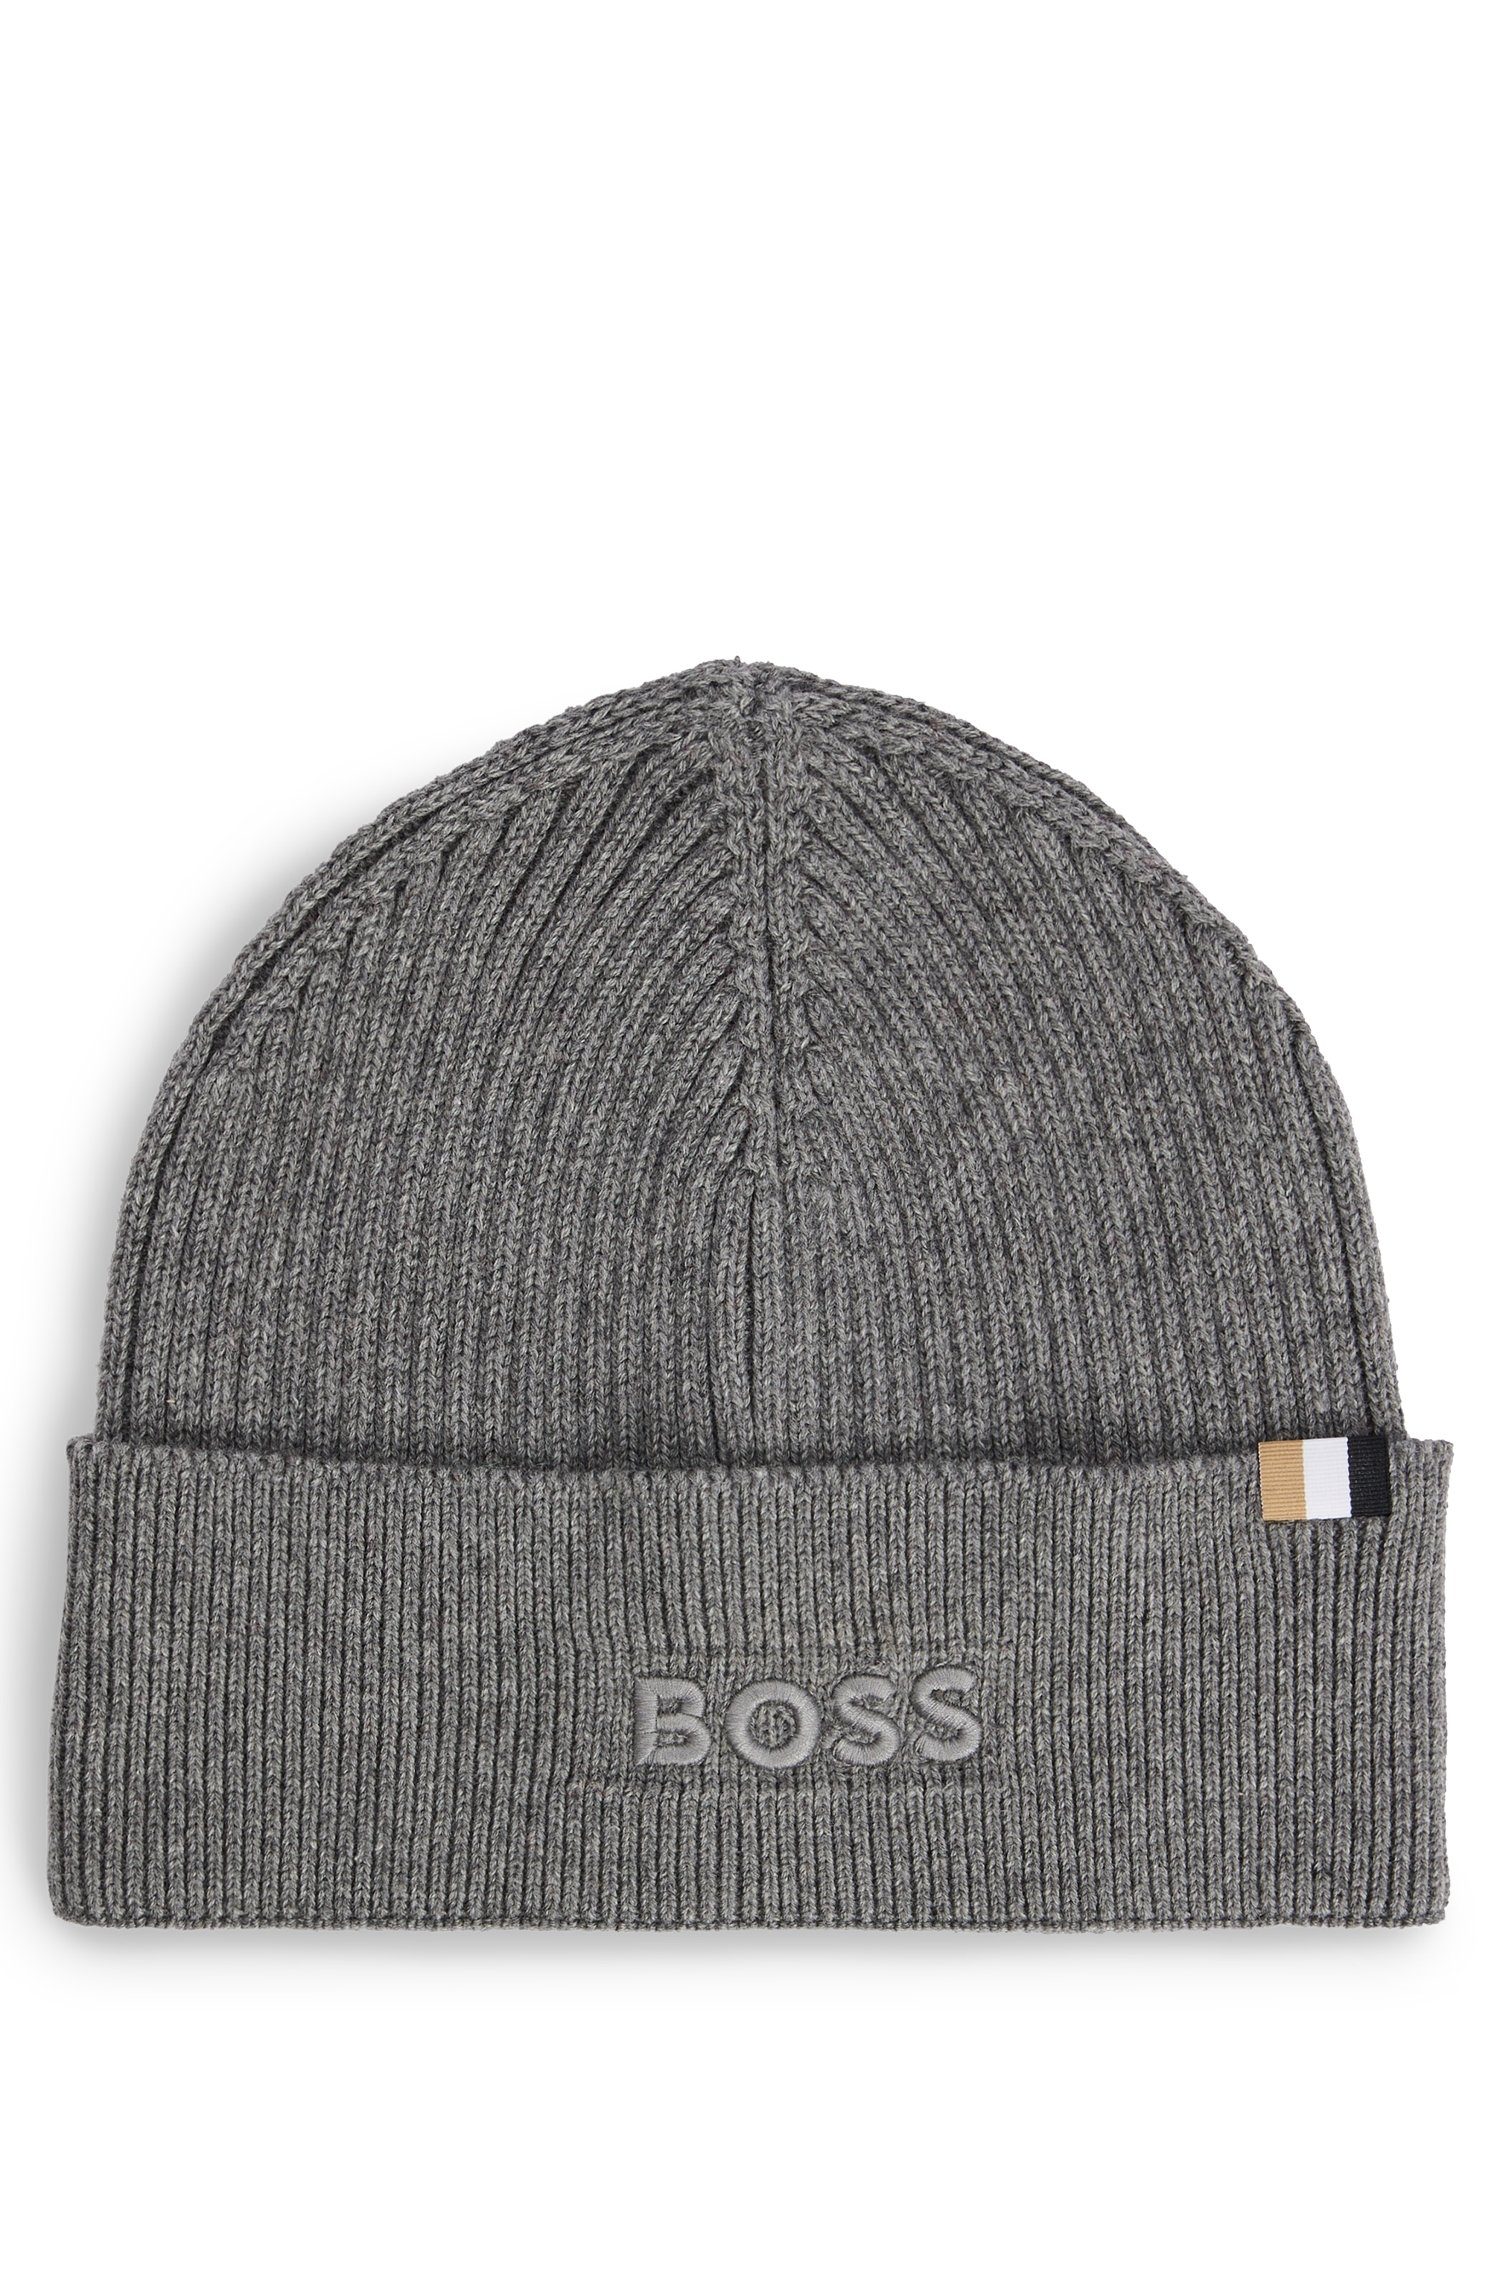 BOSS Logo-Stickerei 030 Grey Medium BOSS Magico_Hat mit Strickmütze